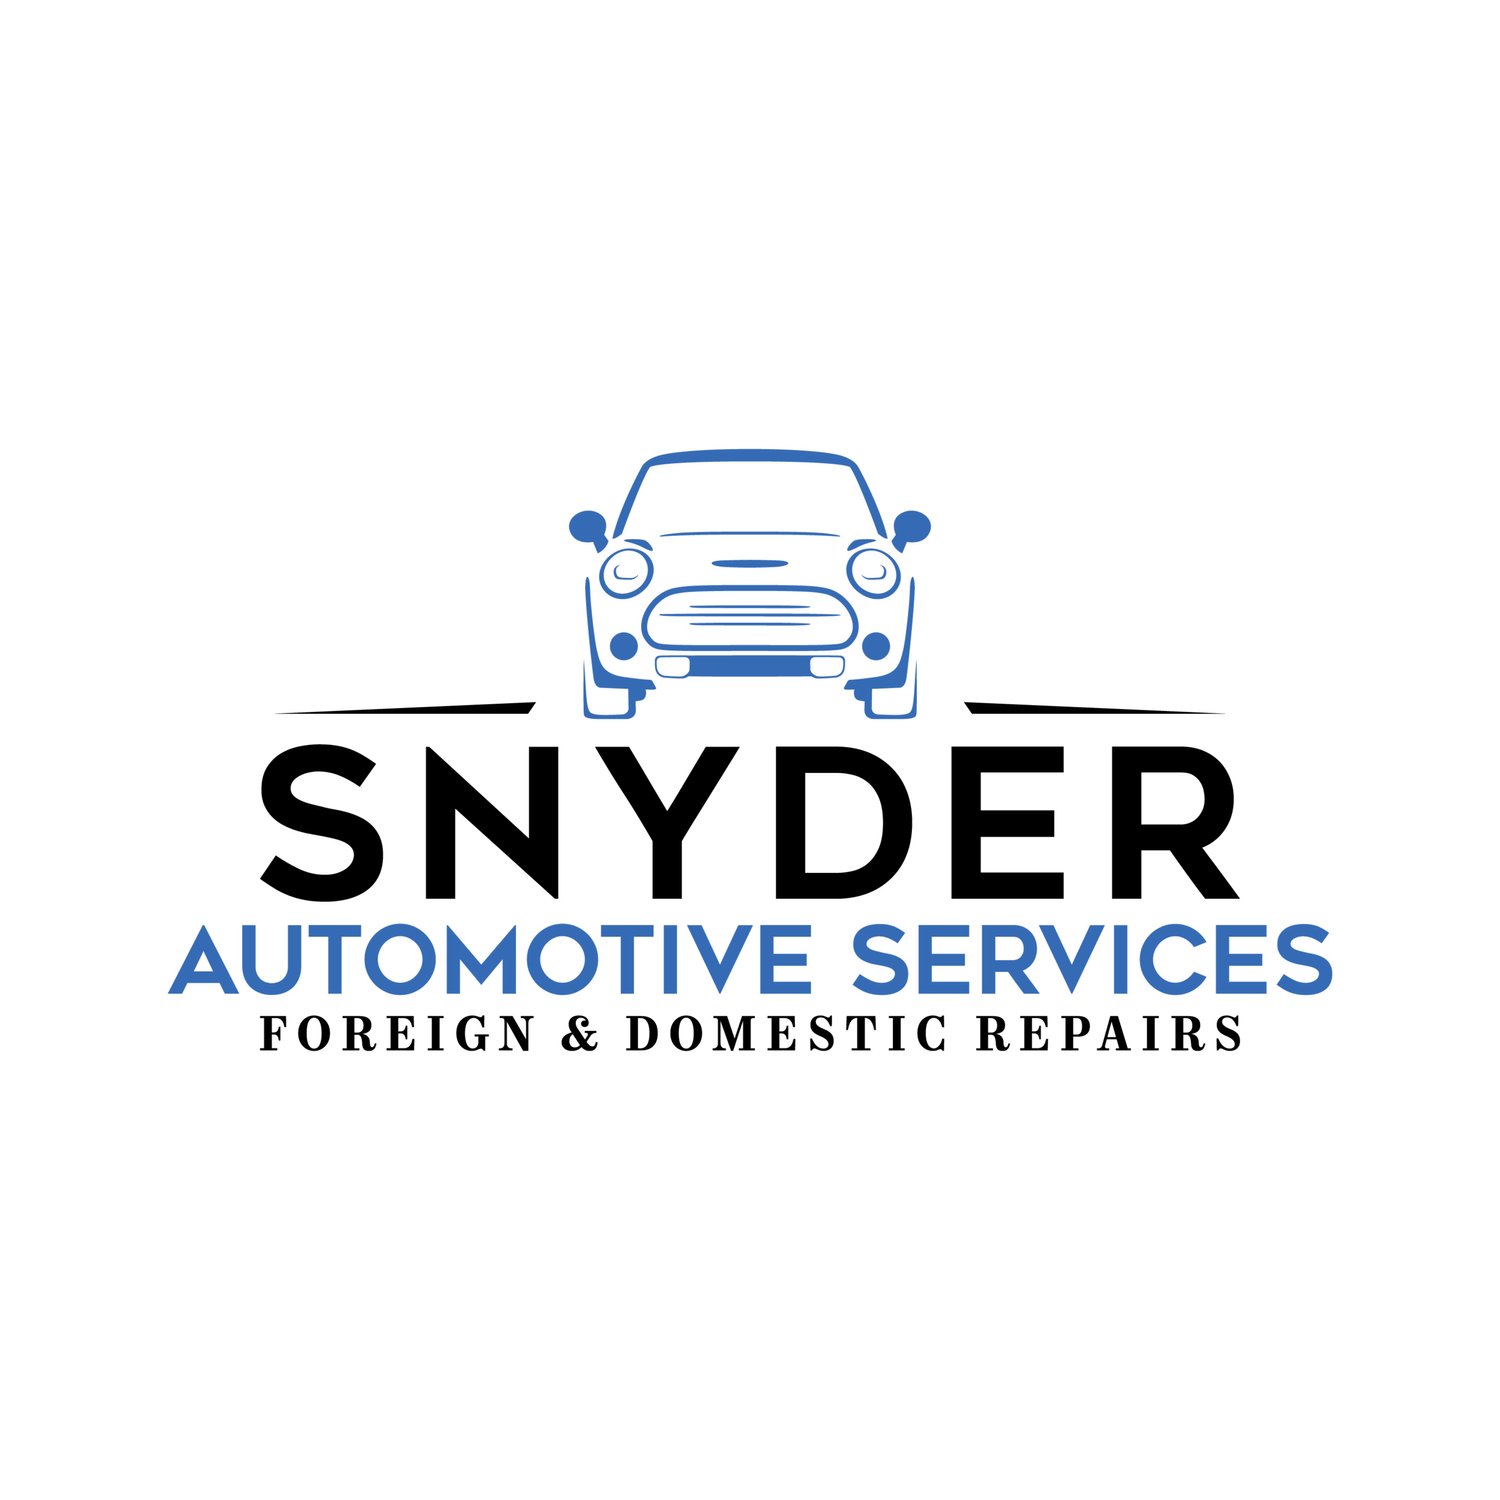 Snyder Automotive Services